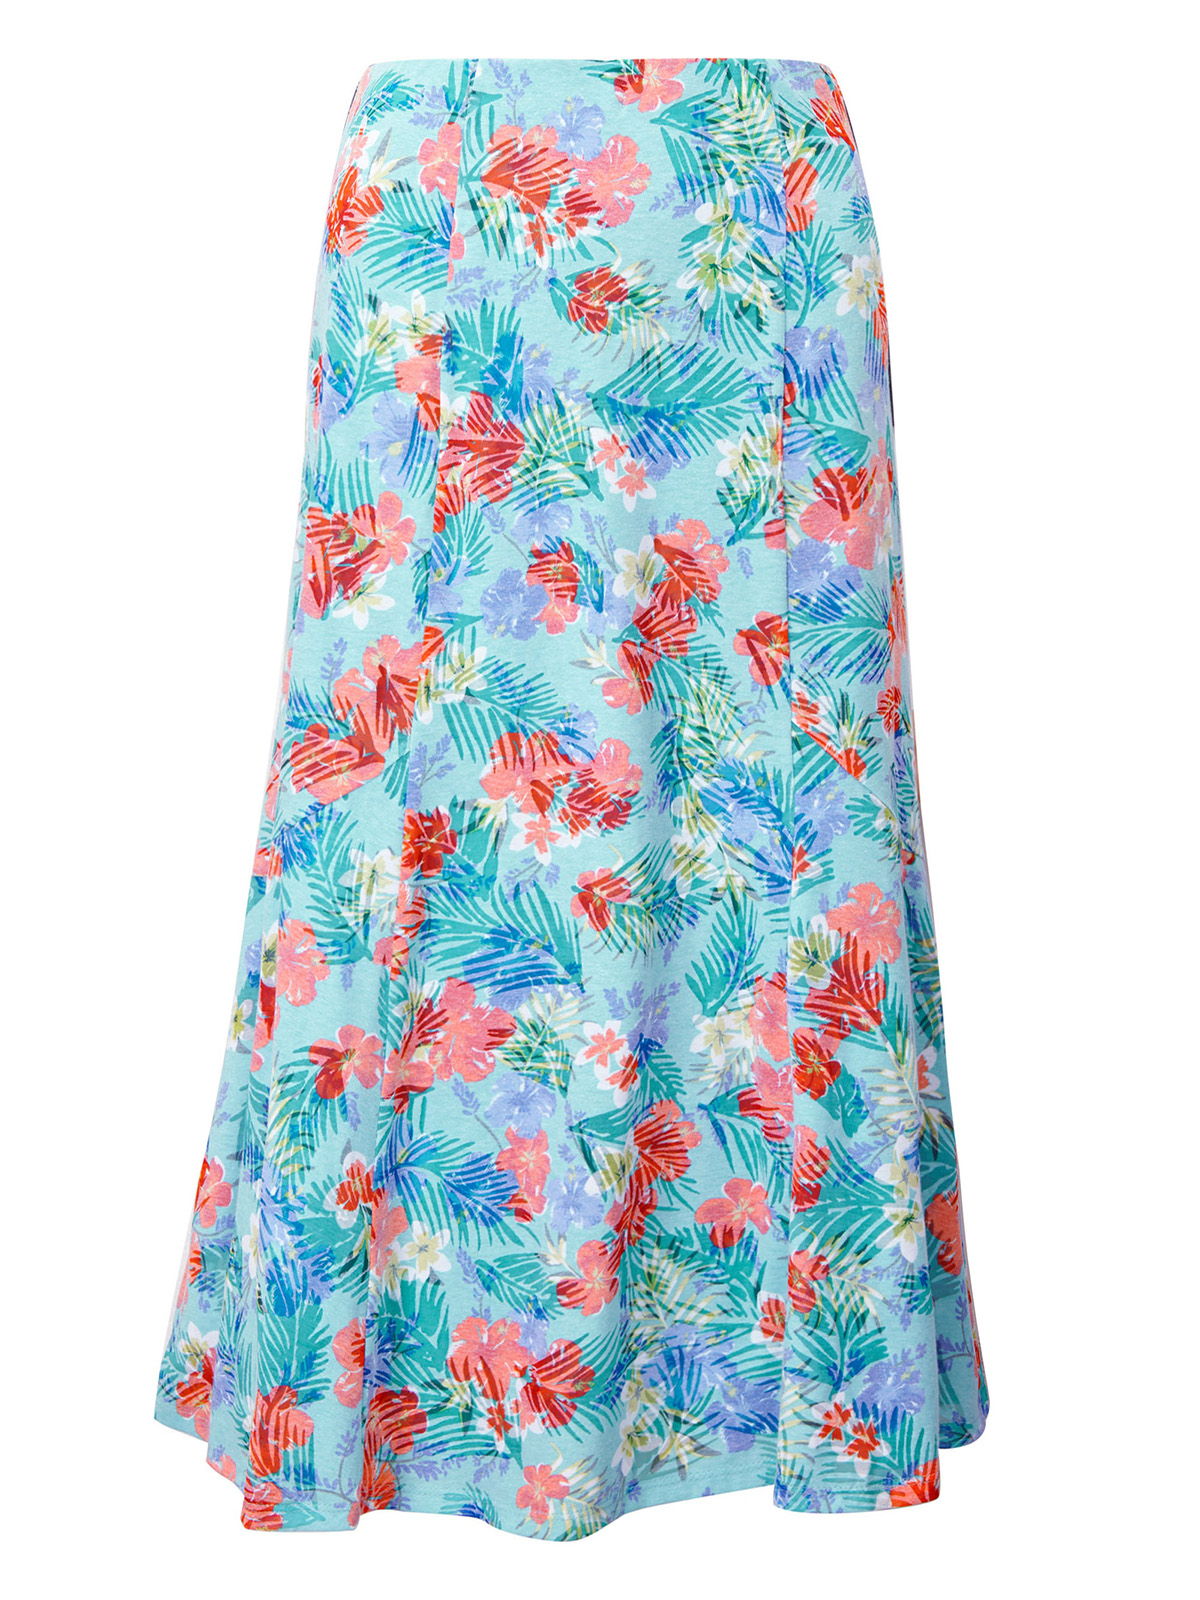 Cotton Traders AQUA Floral Burnout Midi Skirt - Size 10 to 26